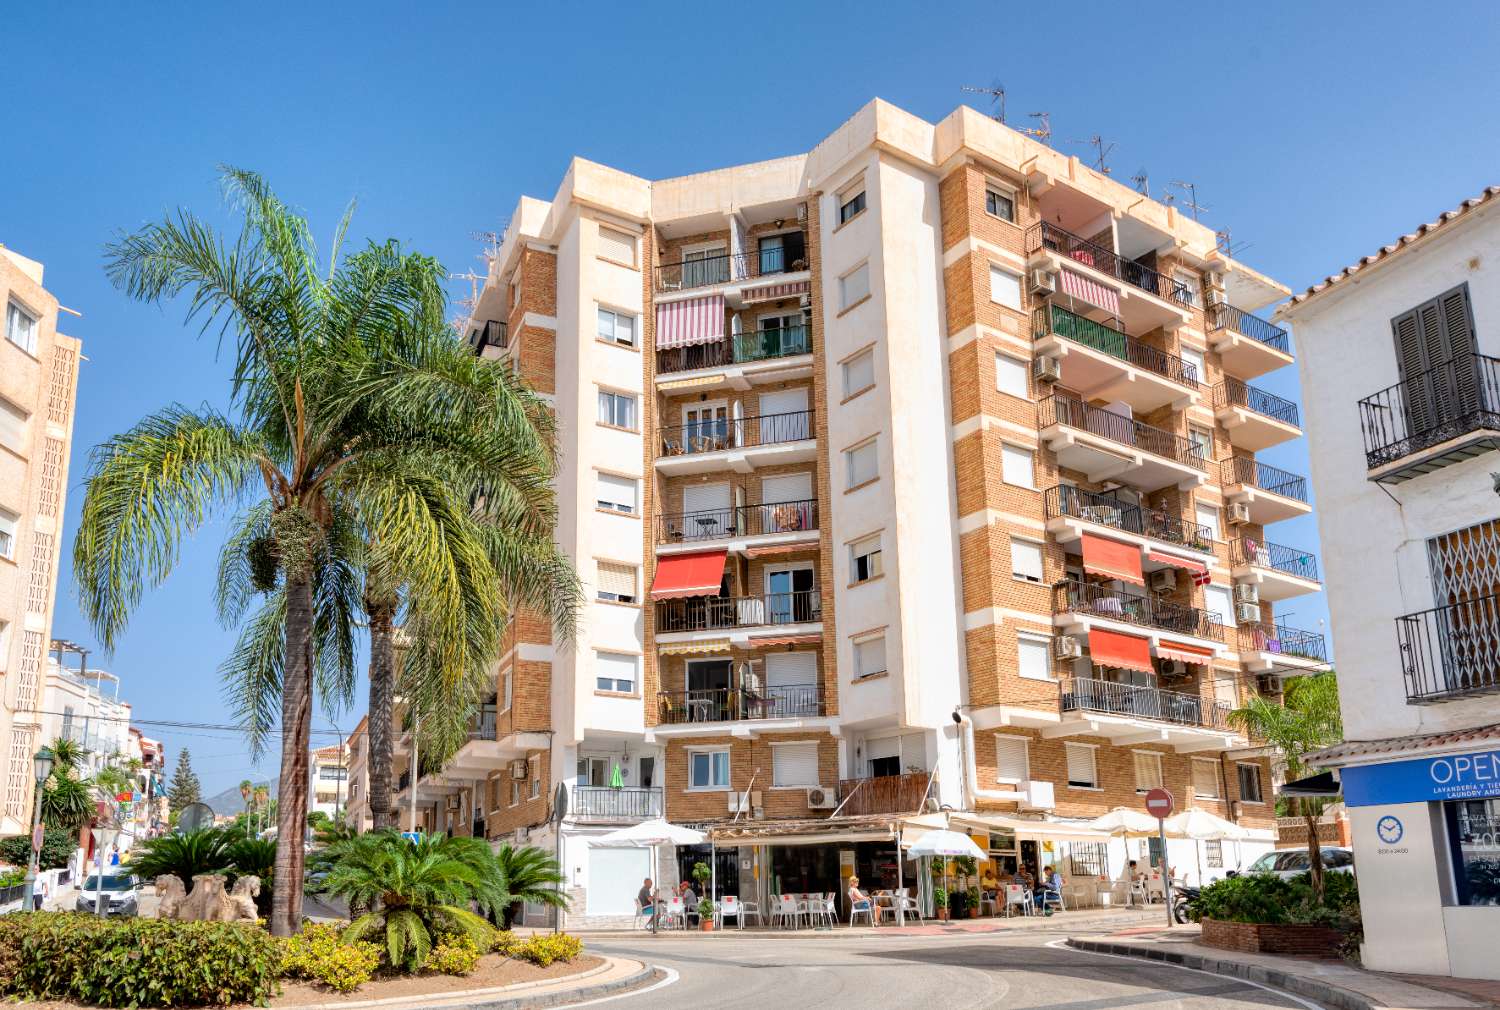 Apartment for sale in Edificio Bahia, next to the Hotel Parador in Nerja